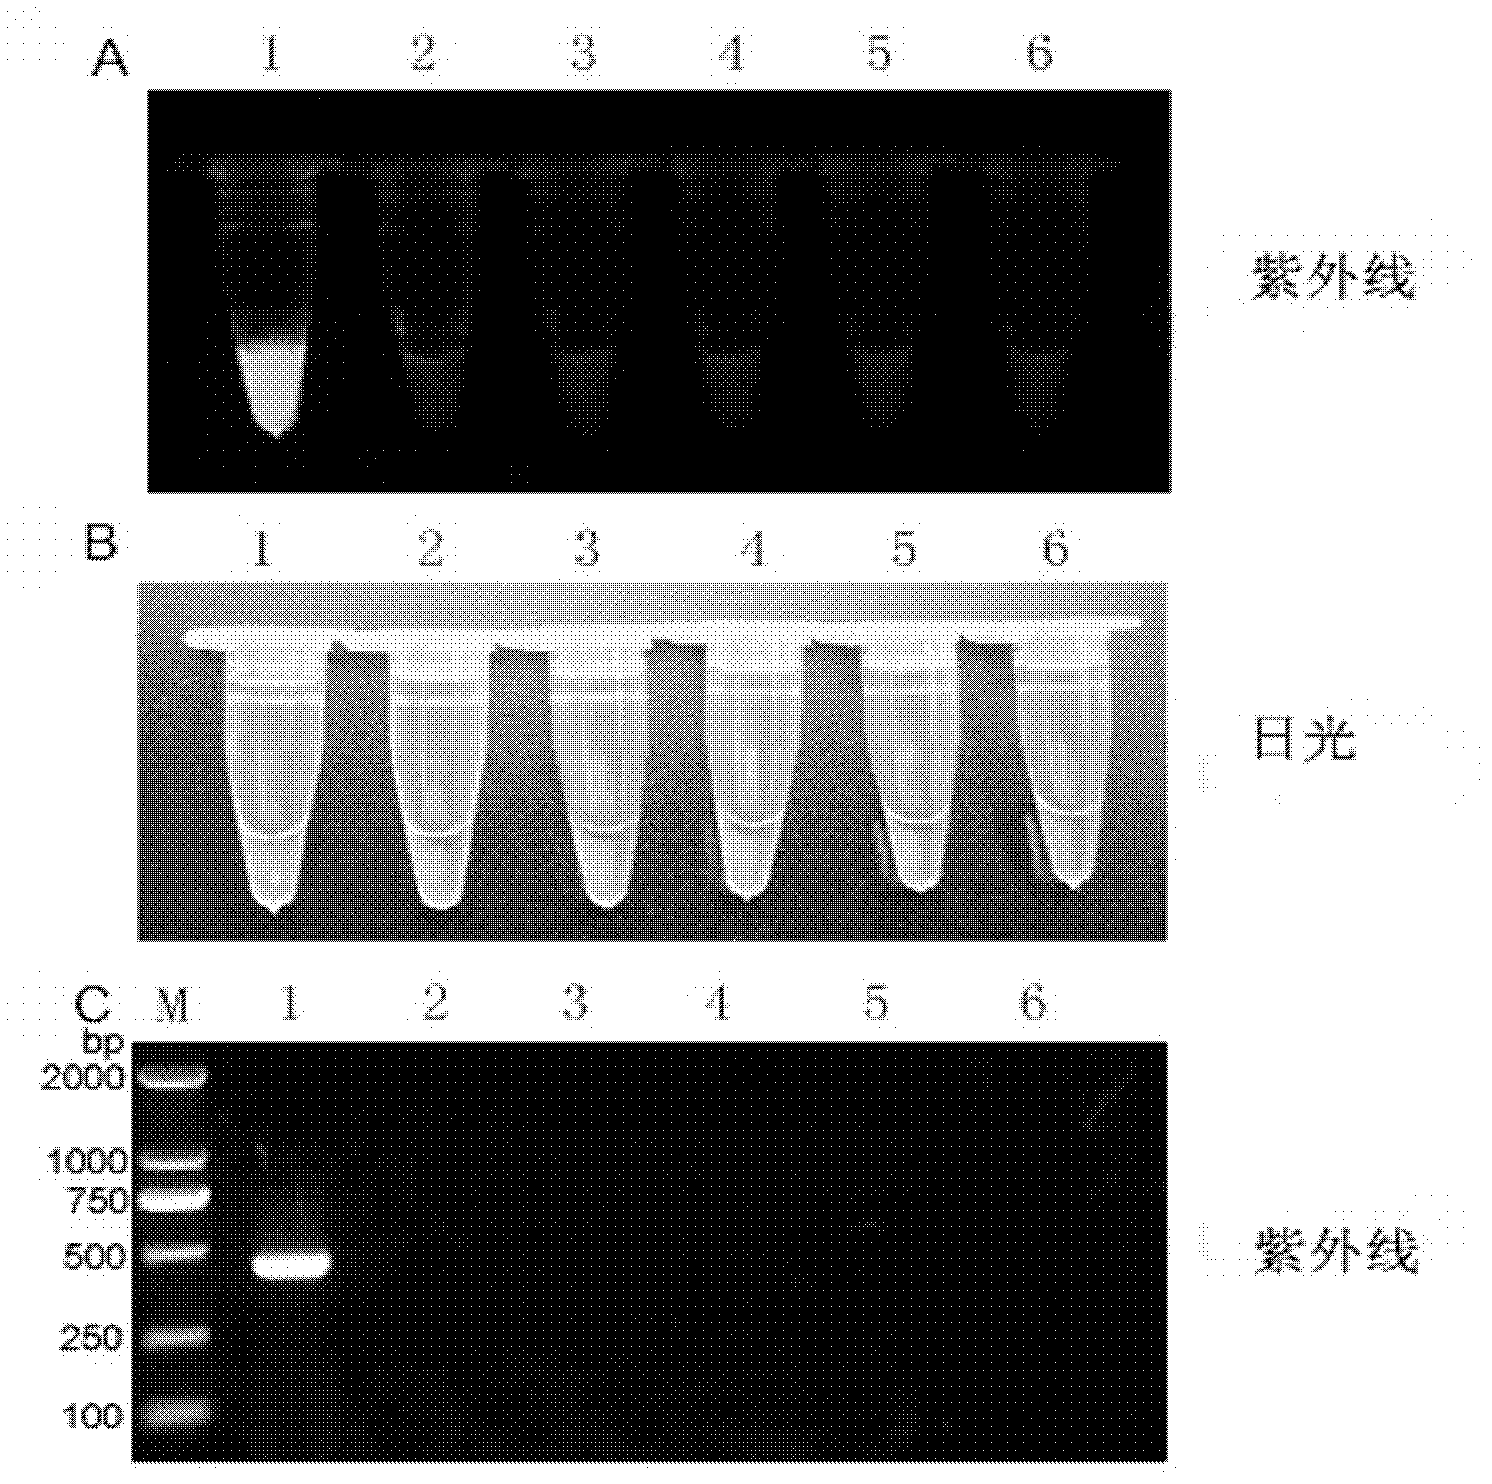 Reverse transcription loop-mediated isothermal amplification (RT-LAMP) visual kit for detecting Japanese B encephalitis virus and application of kit